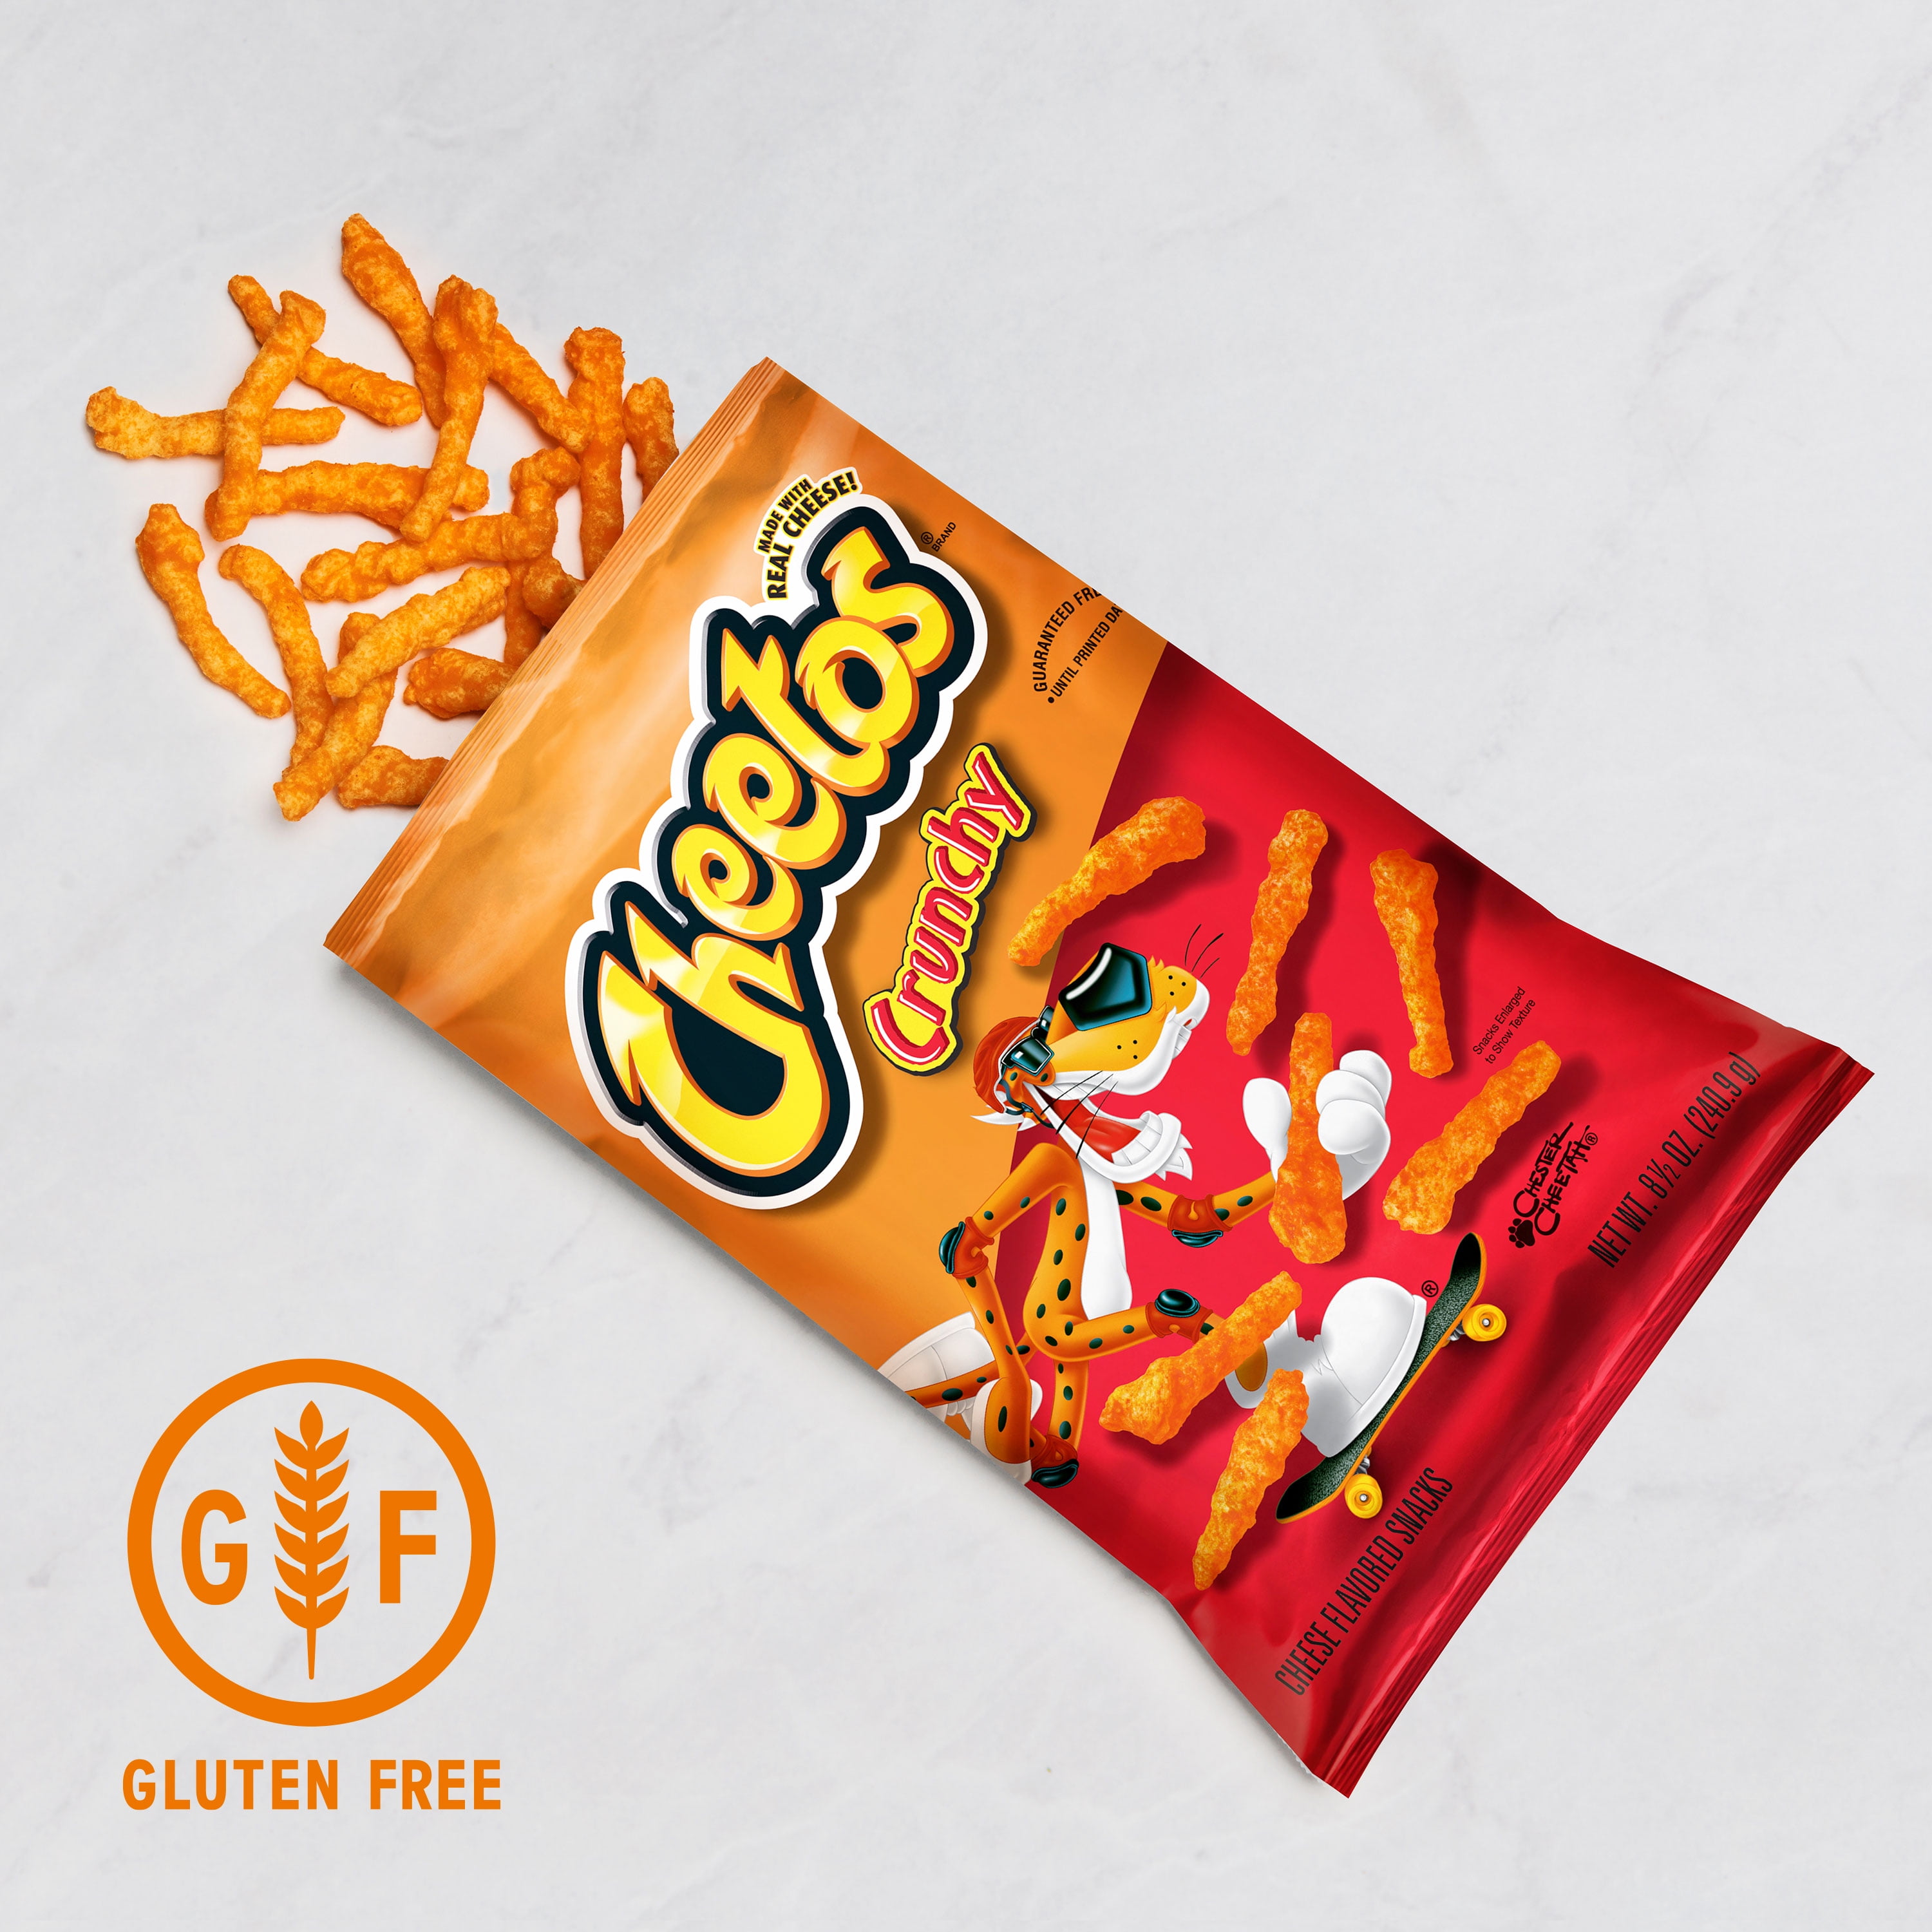 FreshChoice City Market - Cheetos Crunchy Cheese 210g